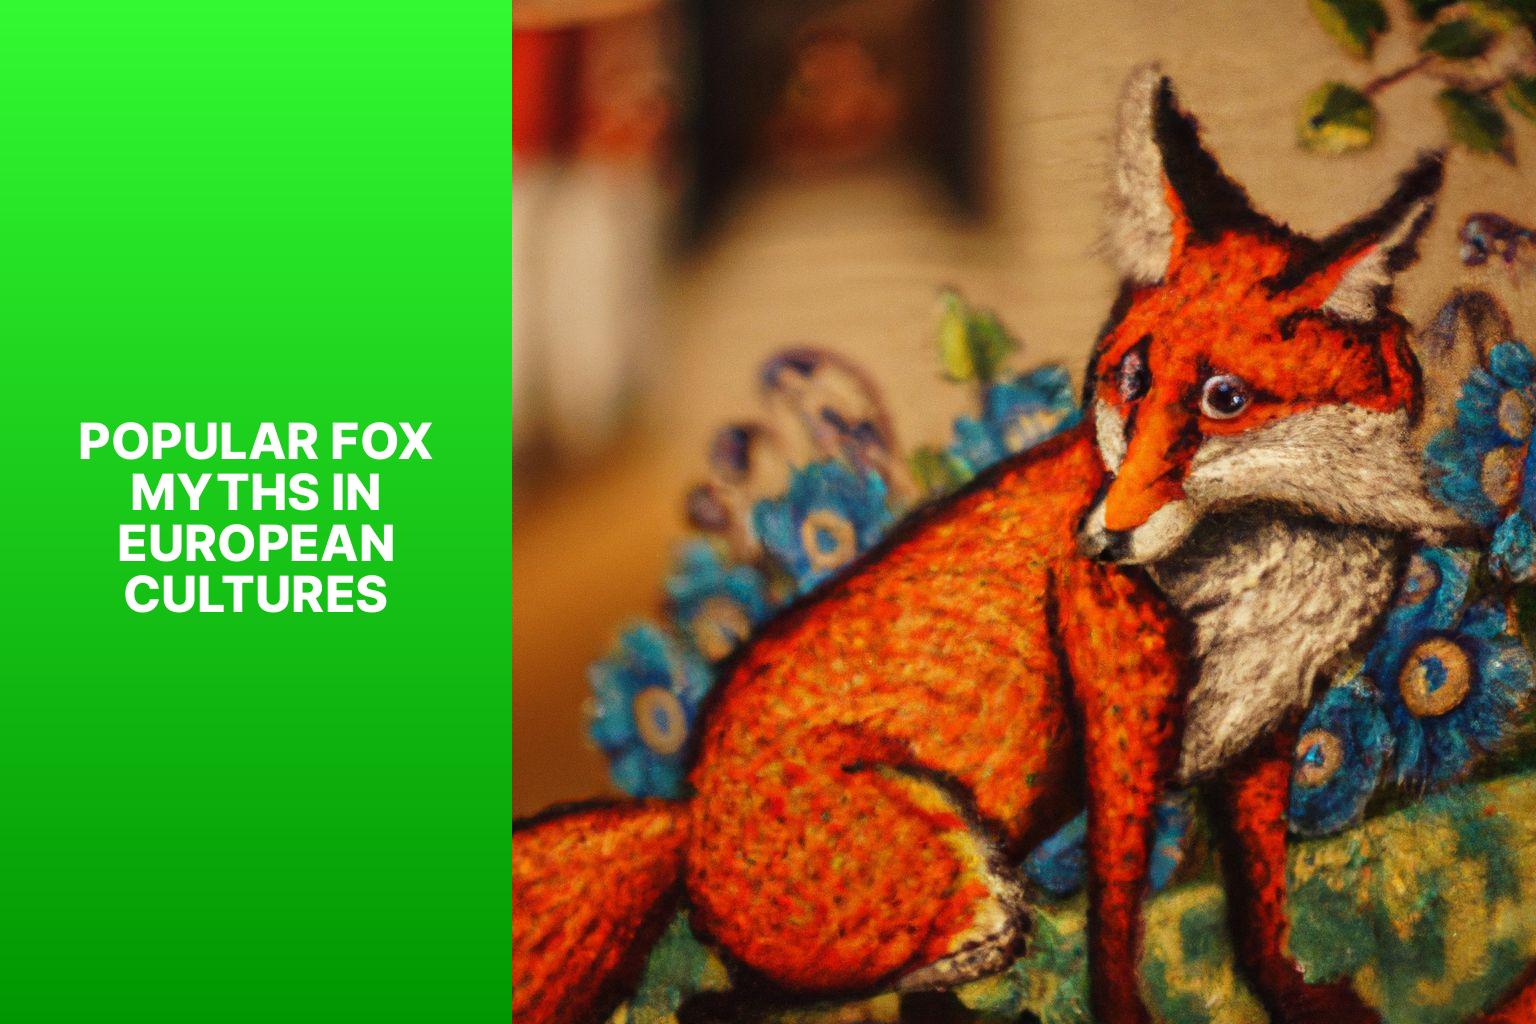 Popular Fox Myths in European Cultures - Fox Myths in European Folklore 